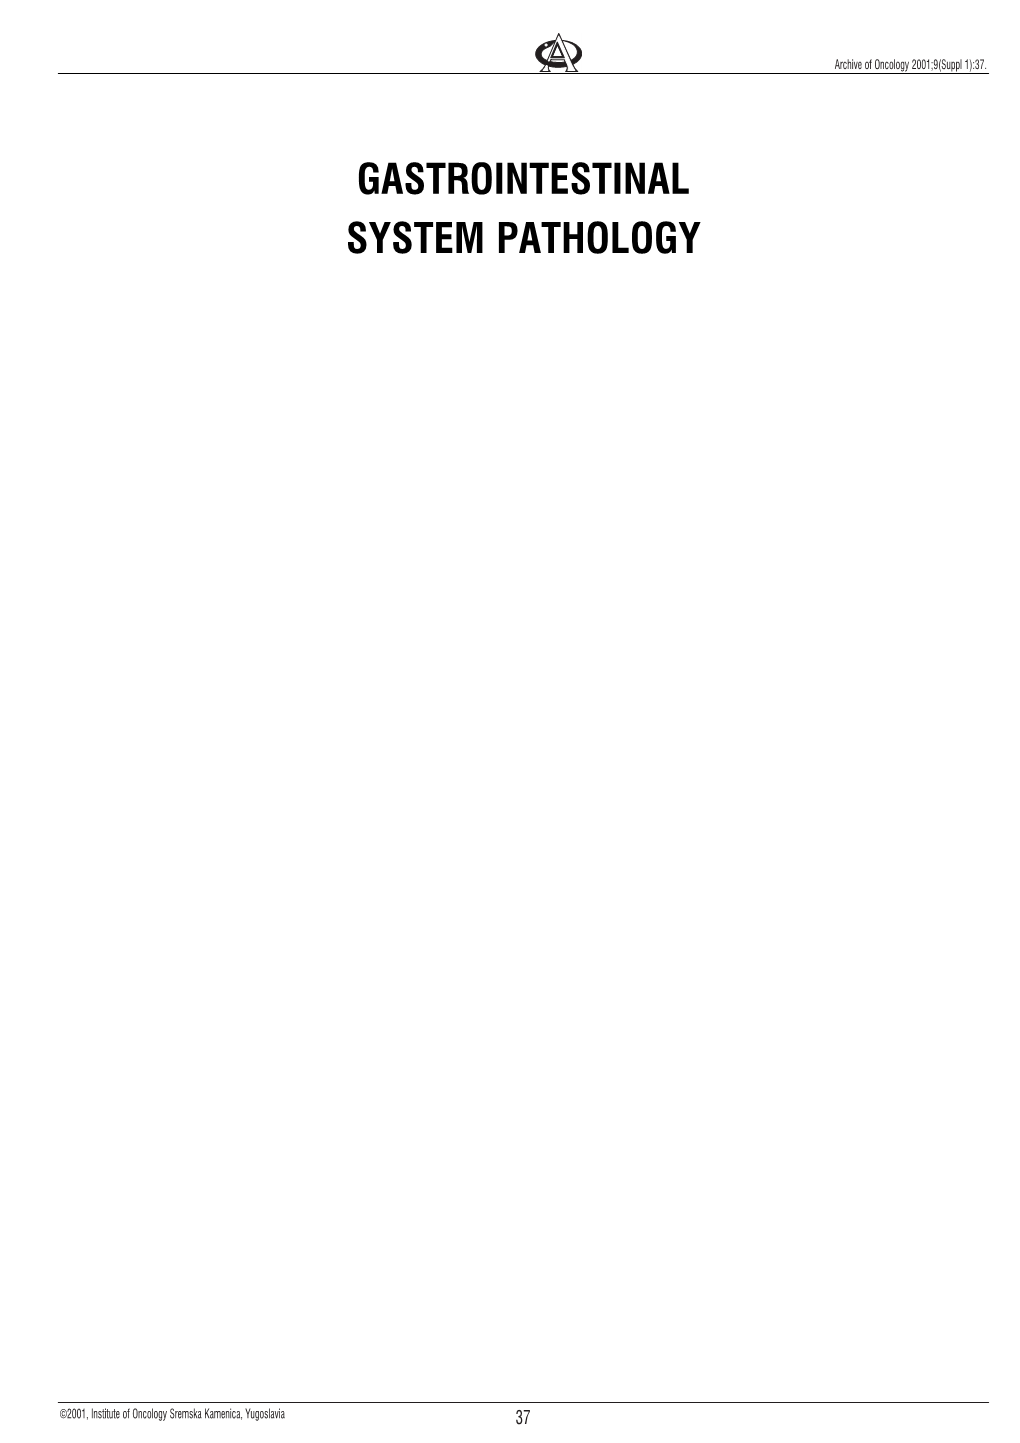 Gastrointestinal System Pathology